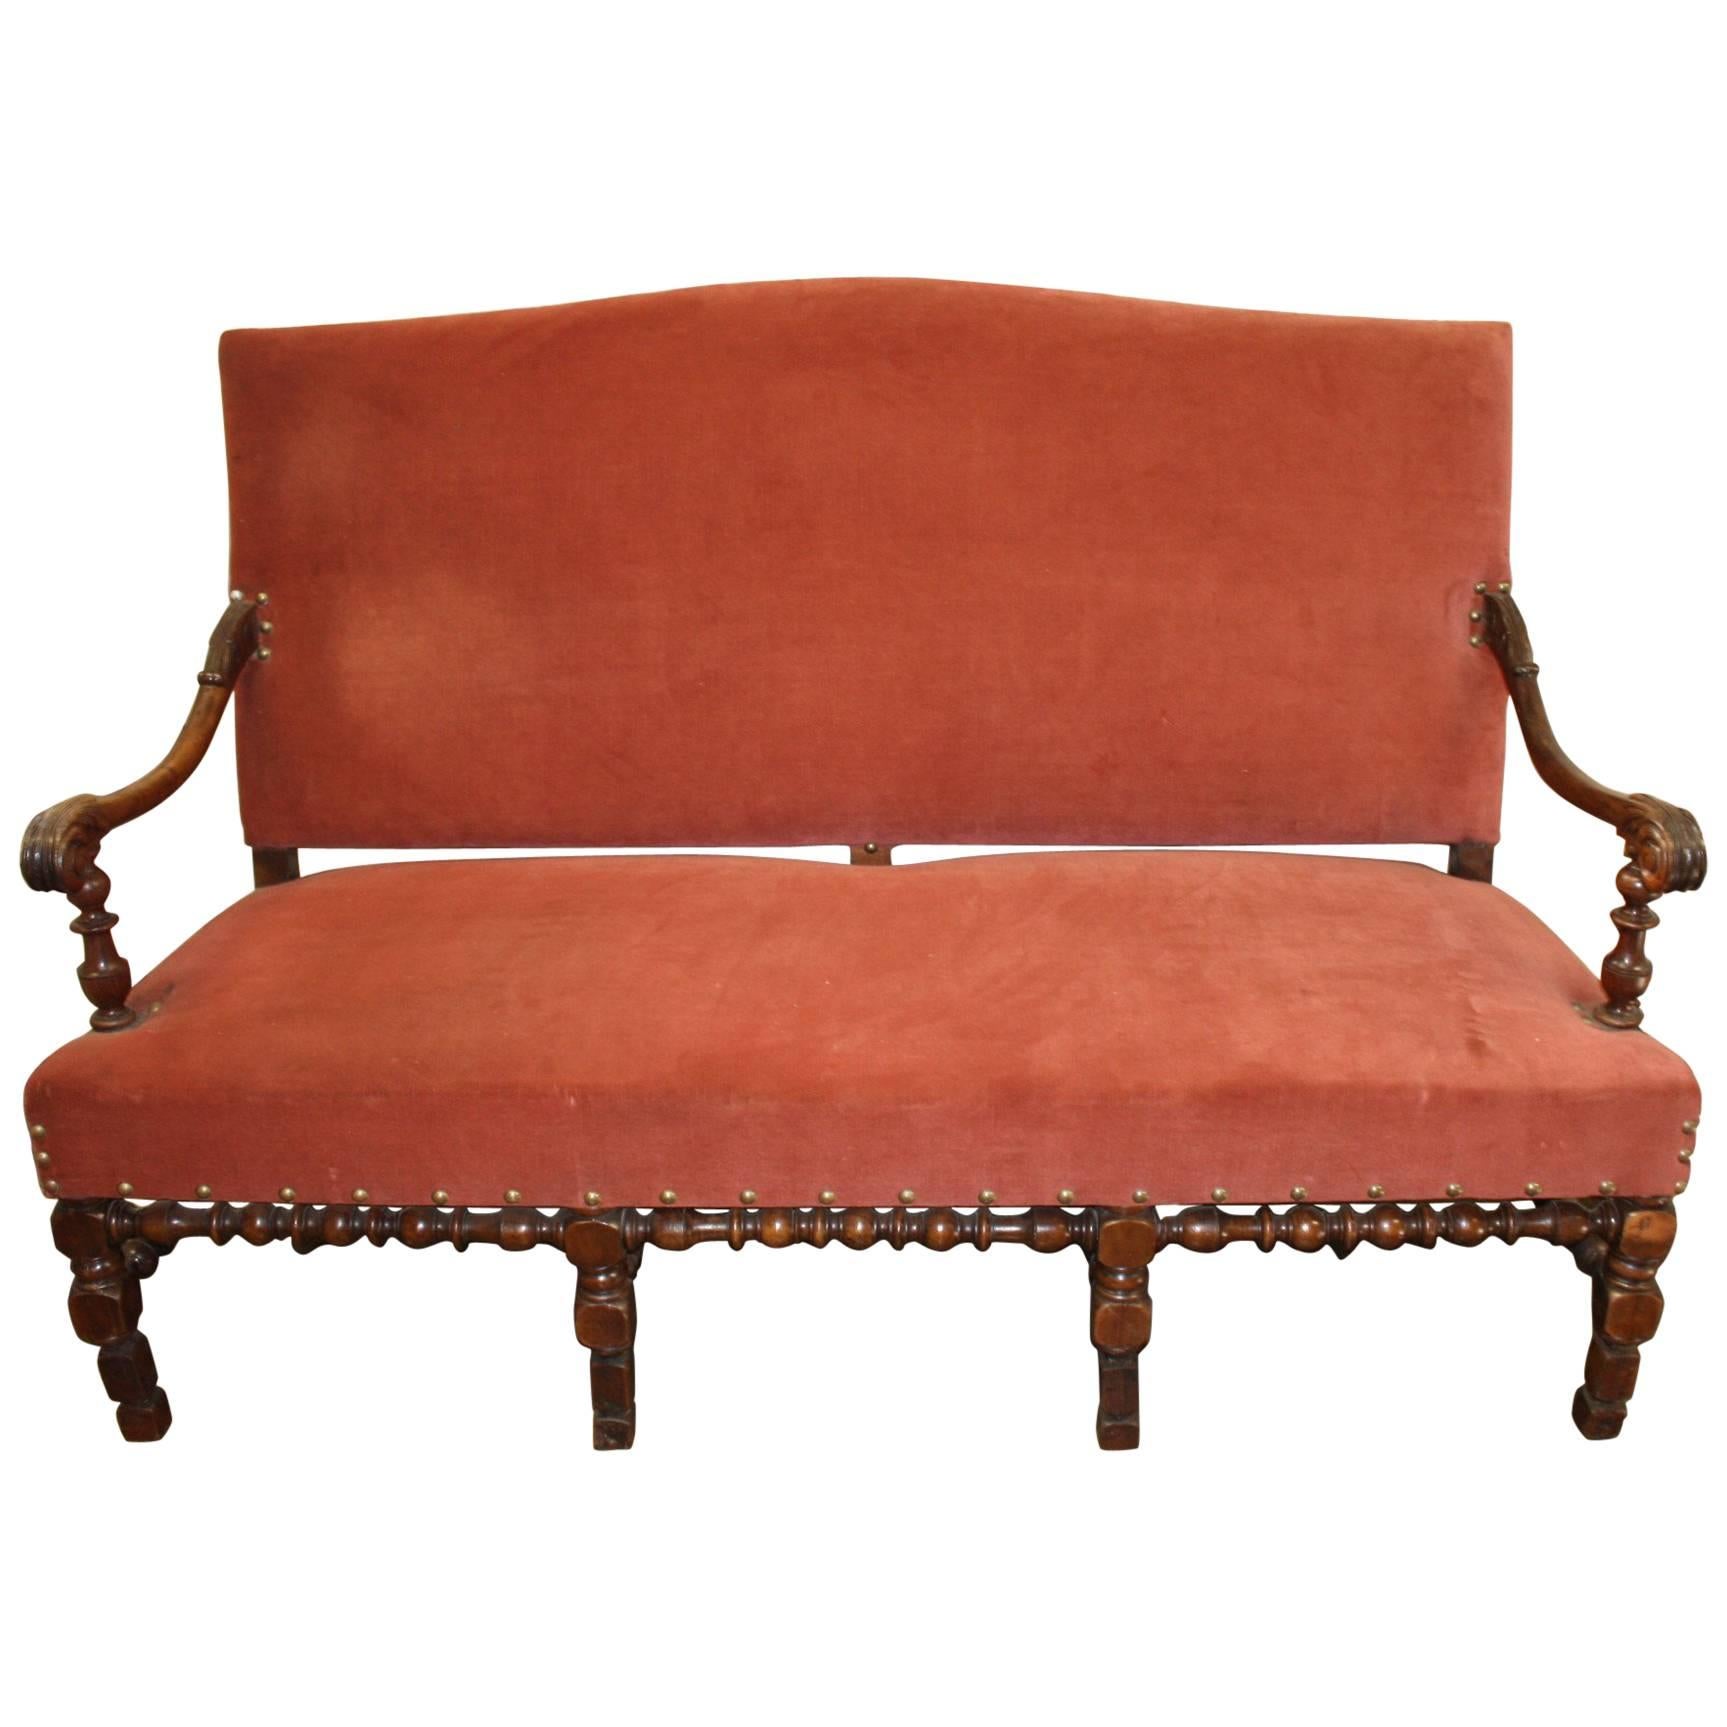 Large 19th Century French Sofa